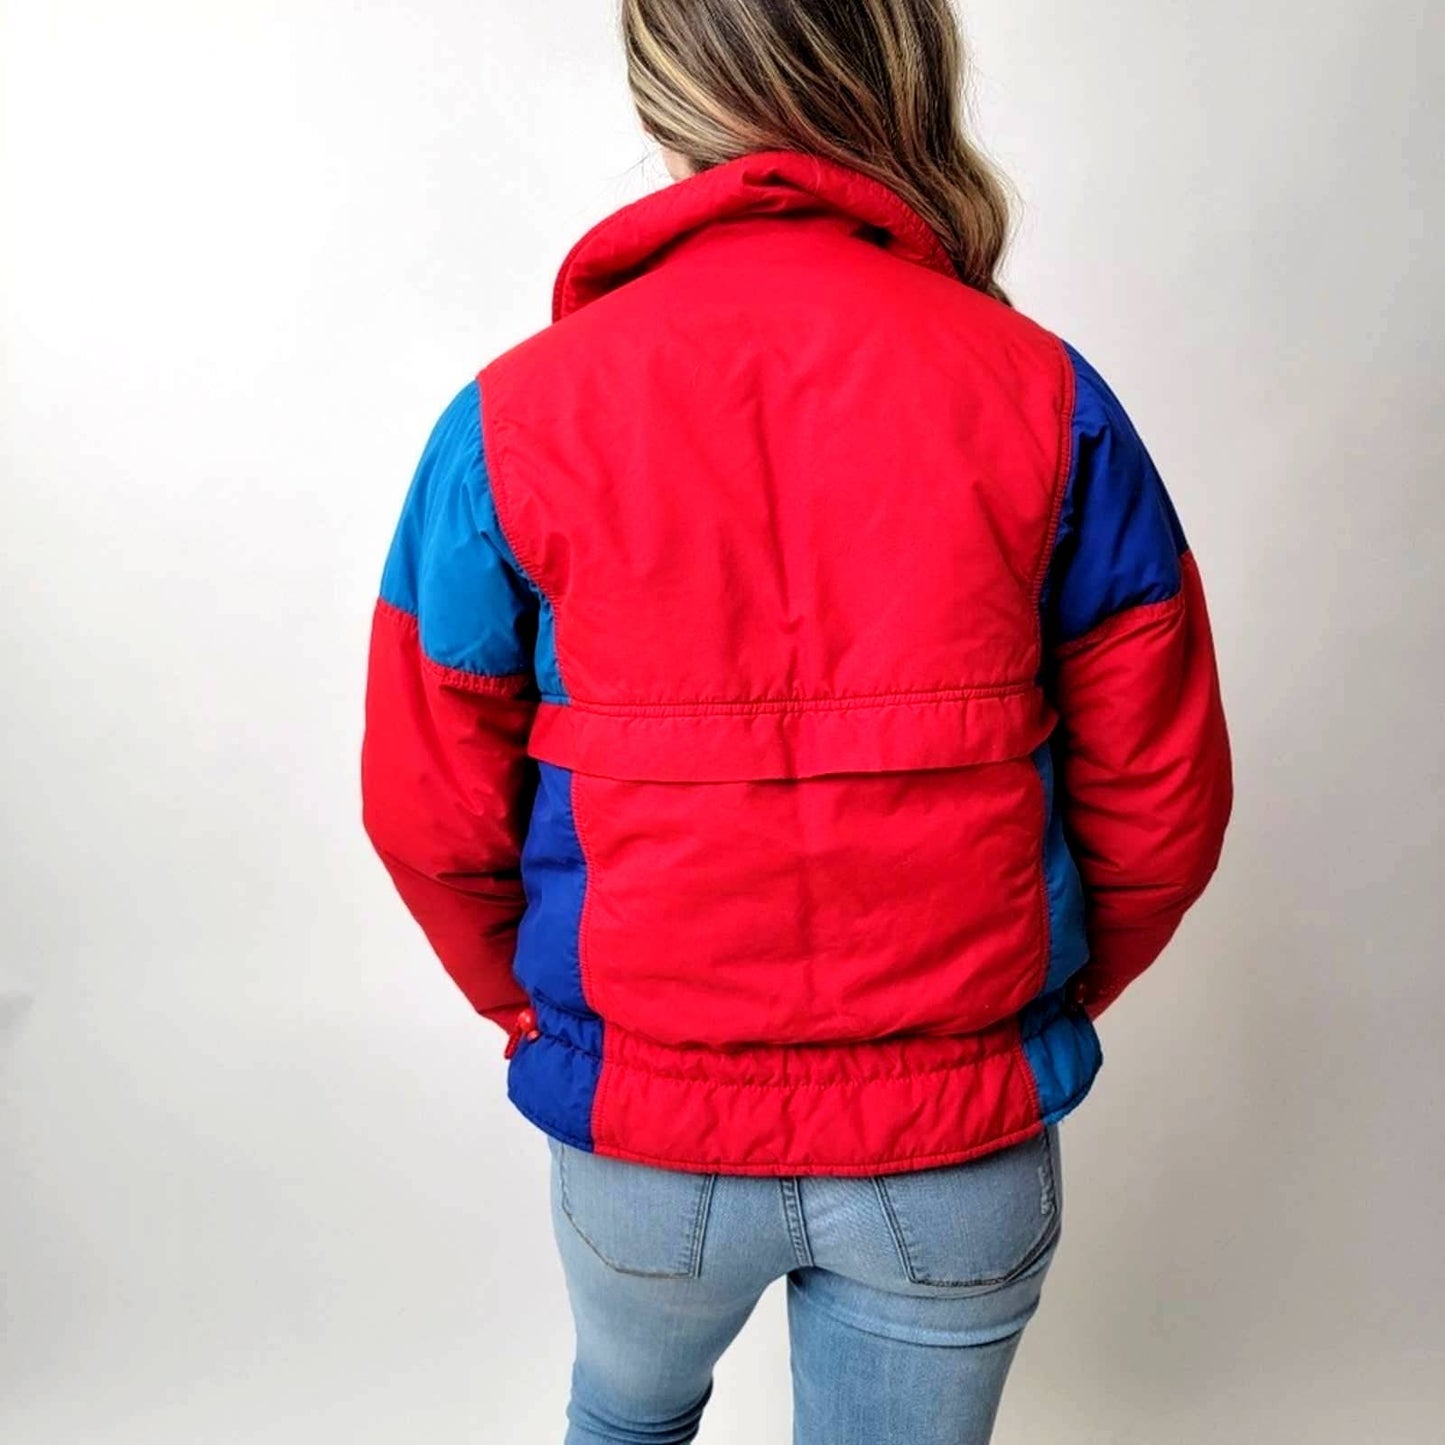 Vintage 90s Roffe Puffer Ski Jacket - M